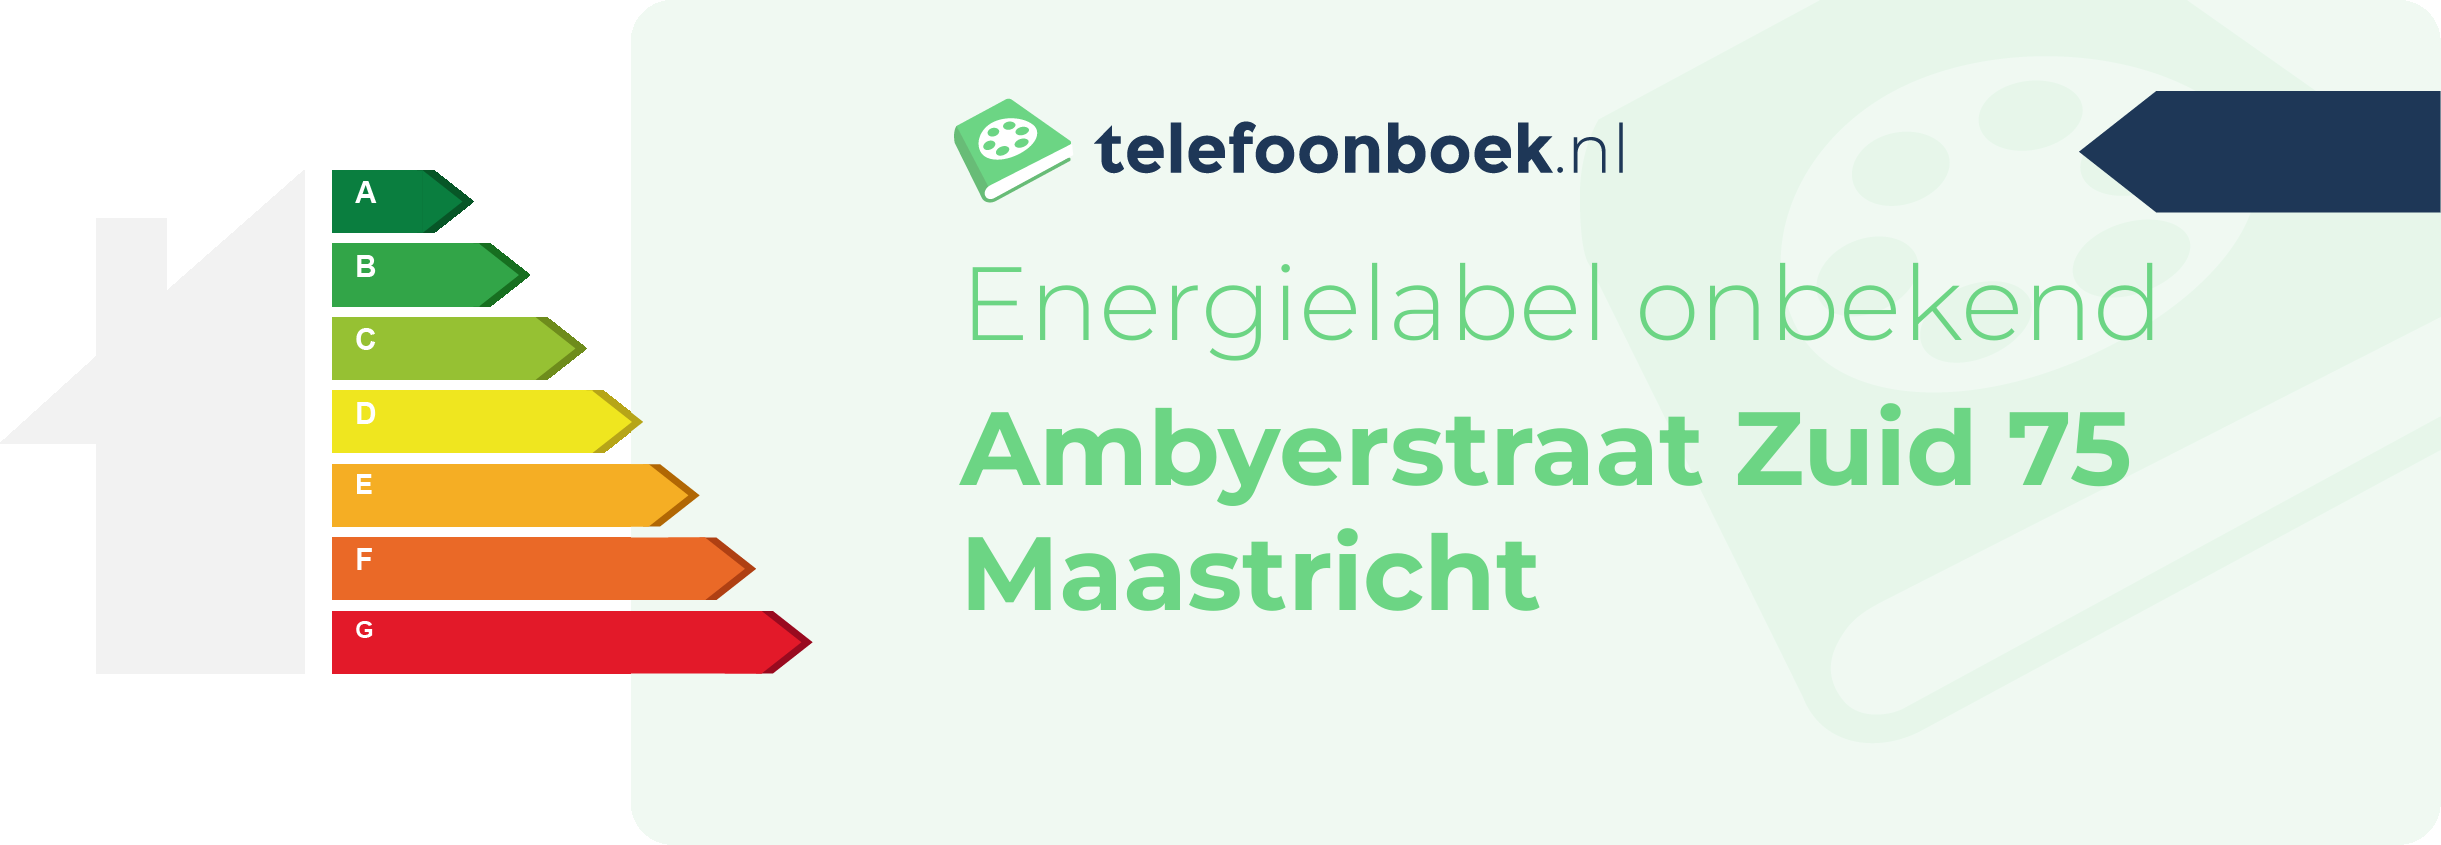 Energielabel Ambyerstraat Zuid 75 Maastricht